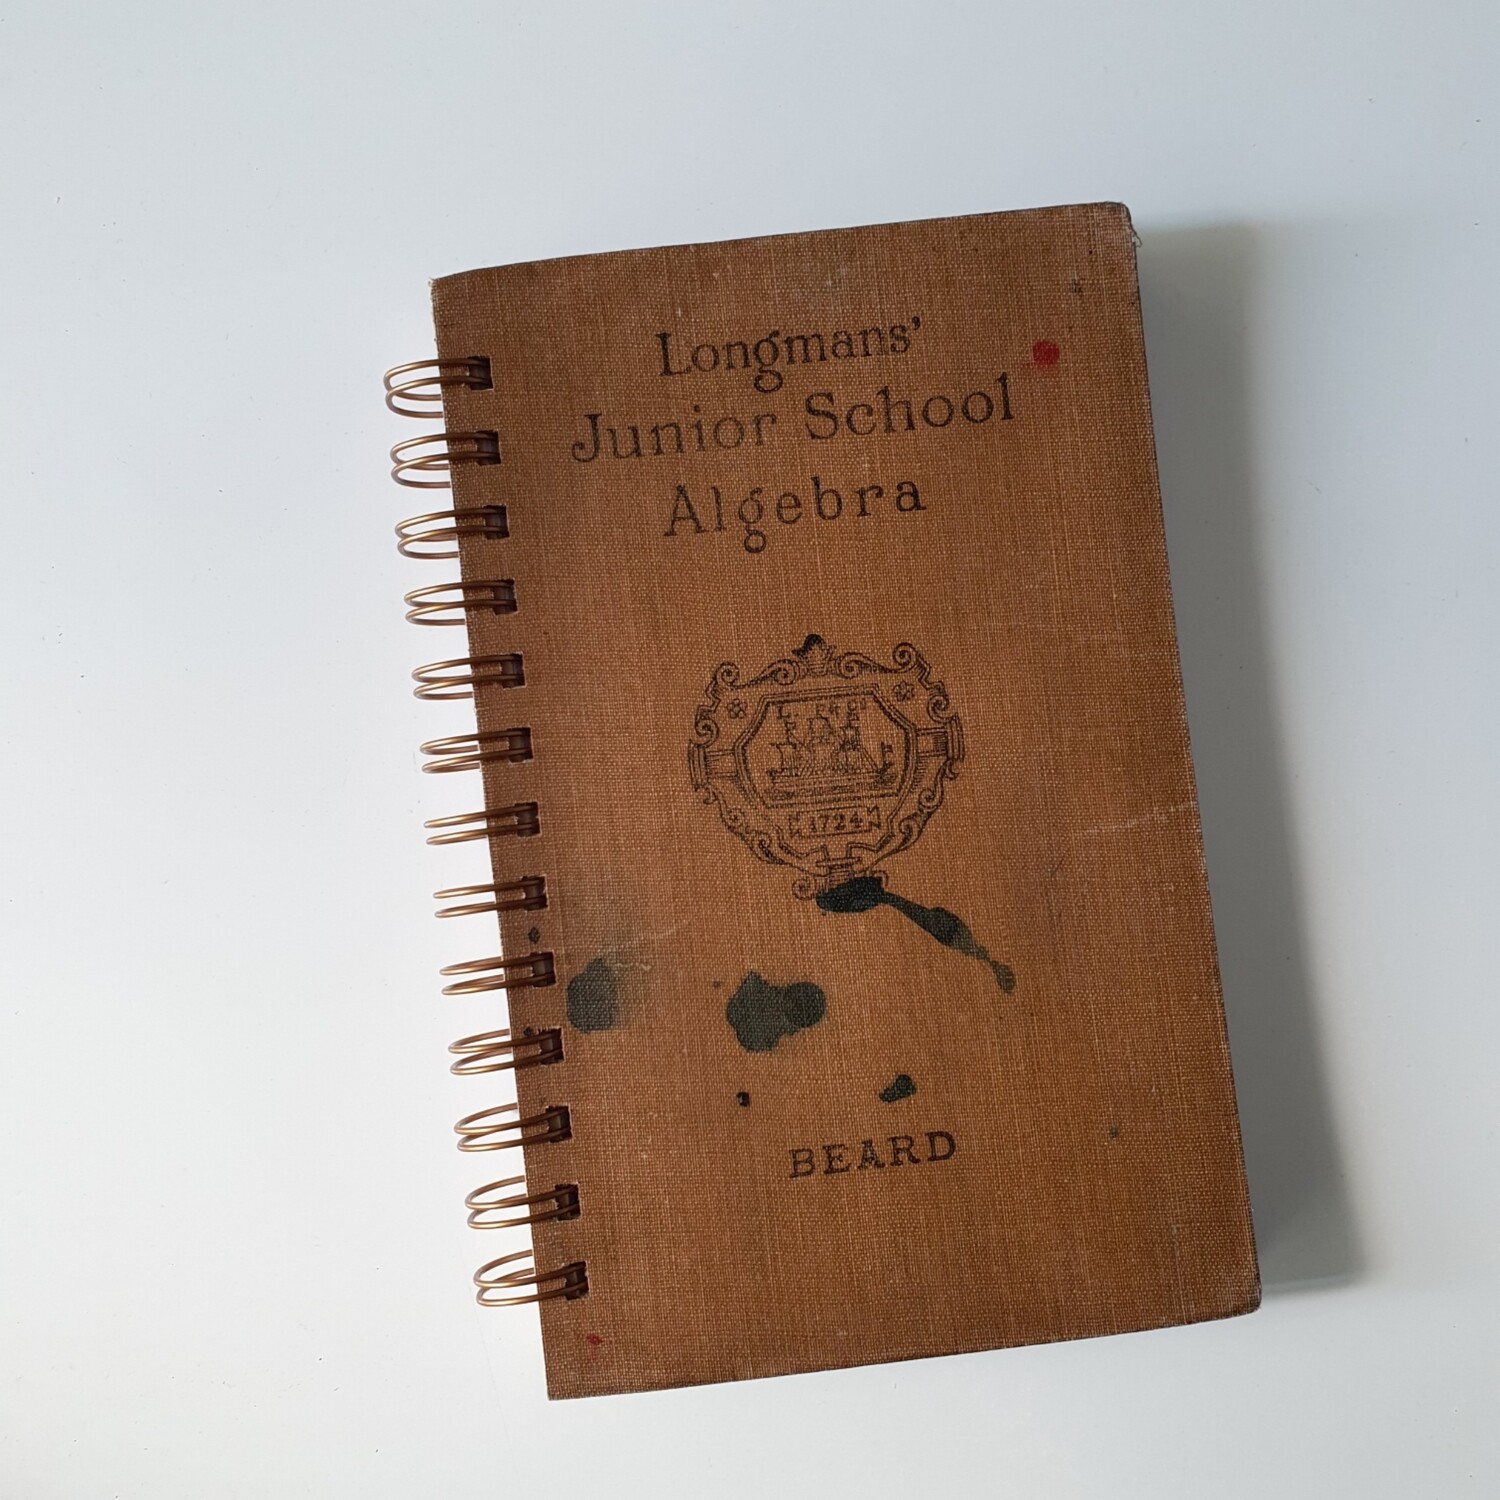 Longmans' Junior School Algebra 1926 plain paper notebook